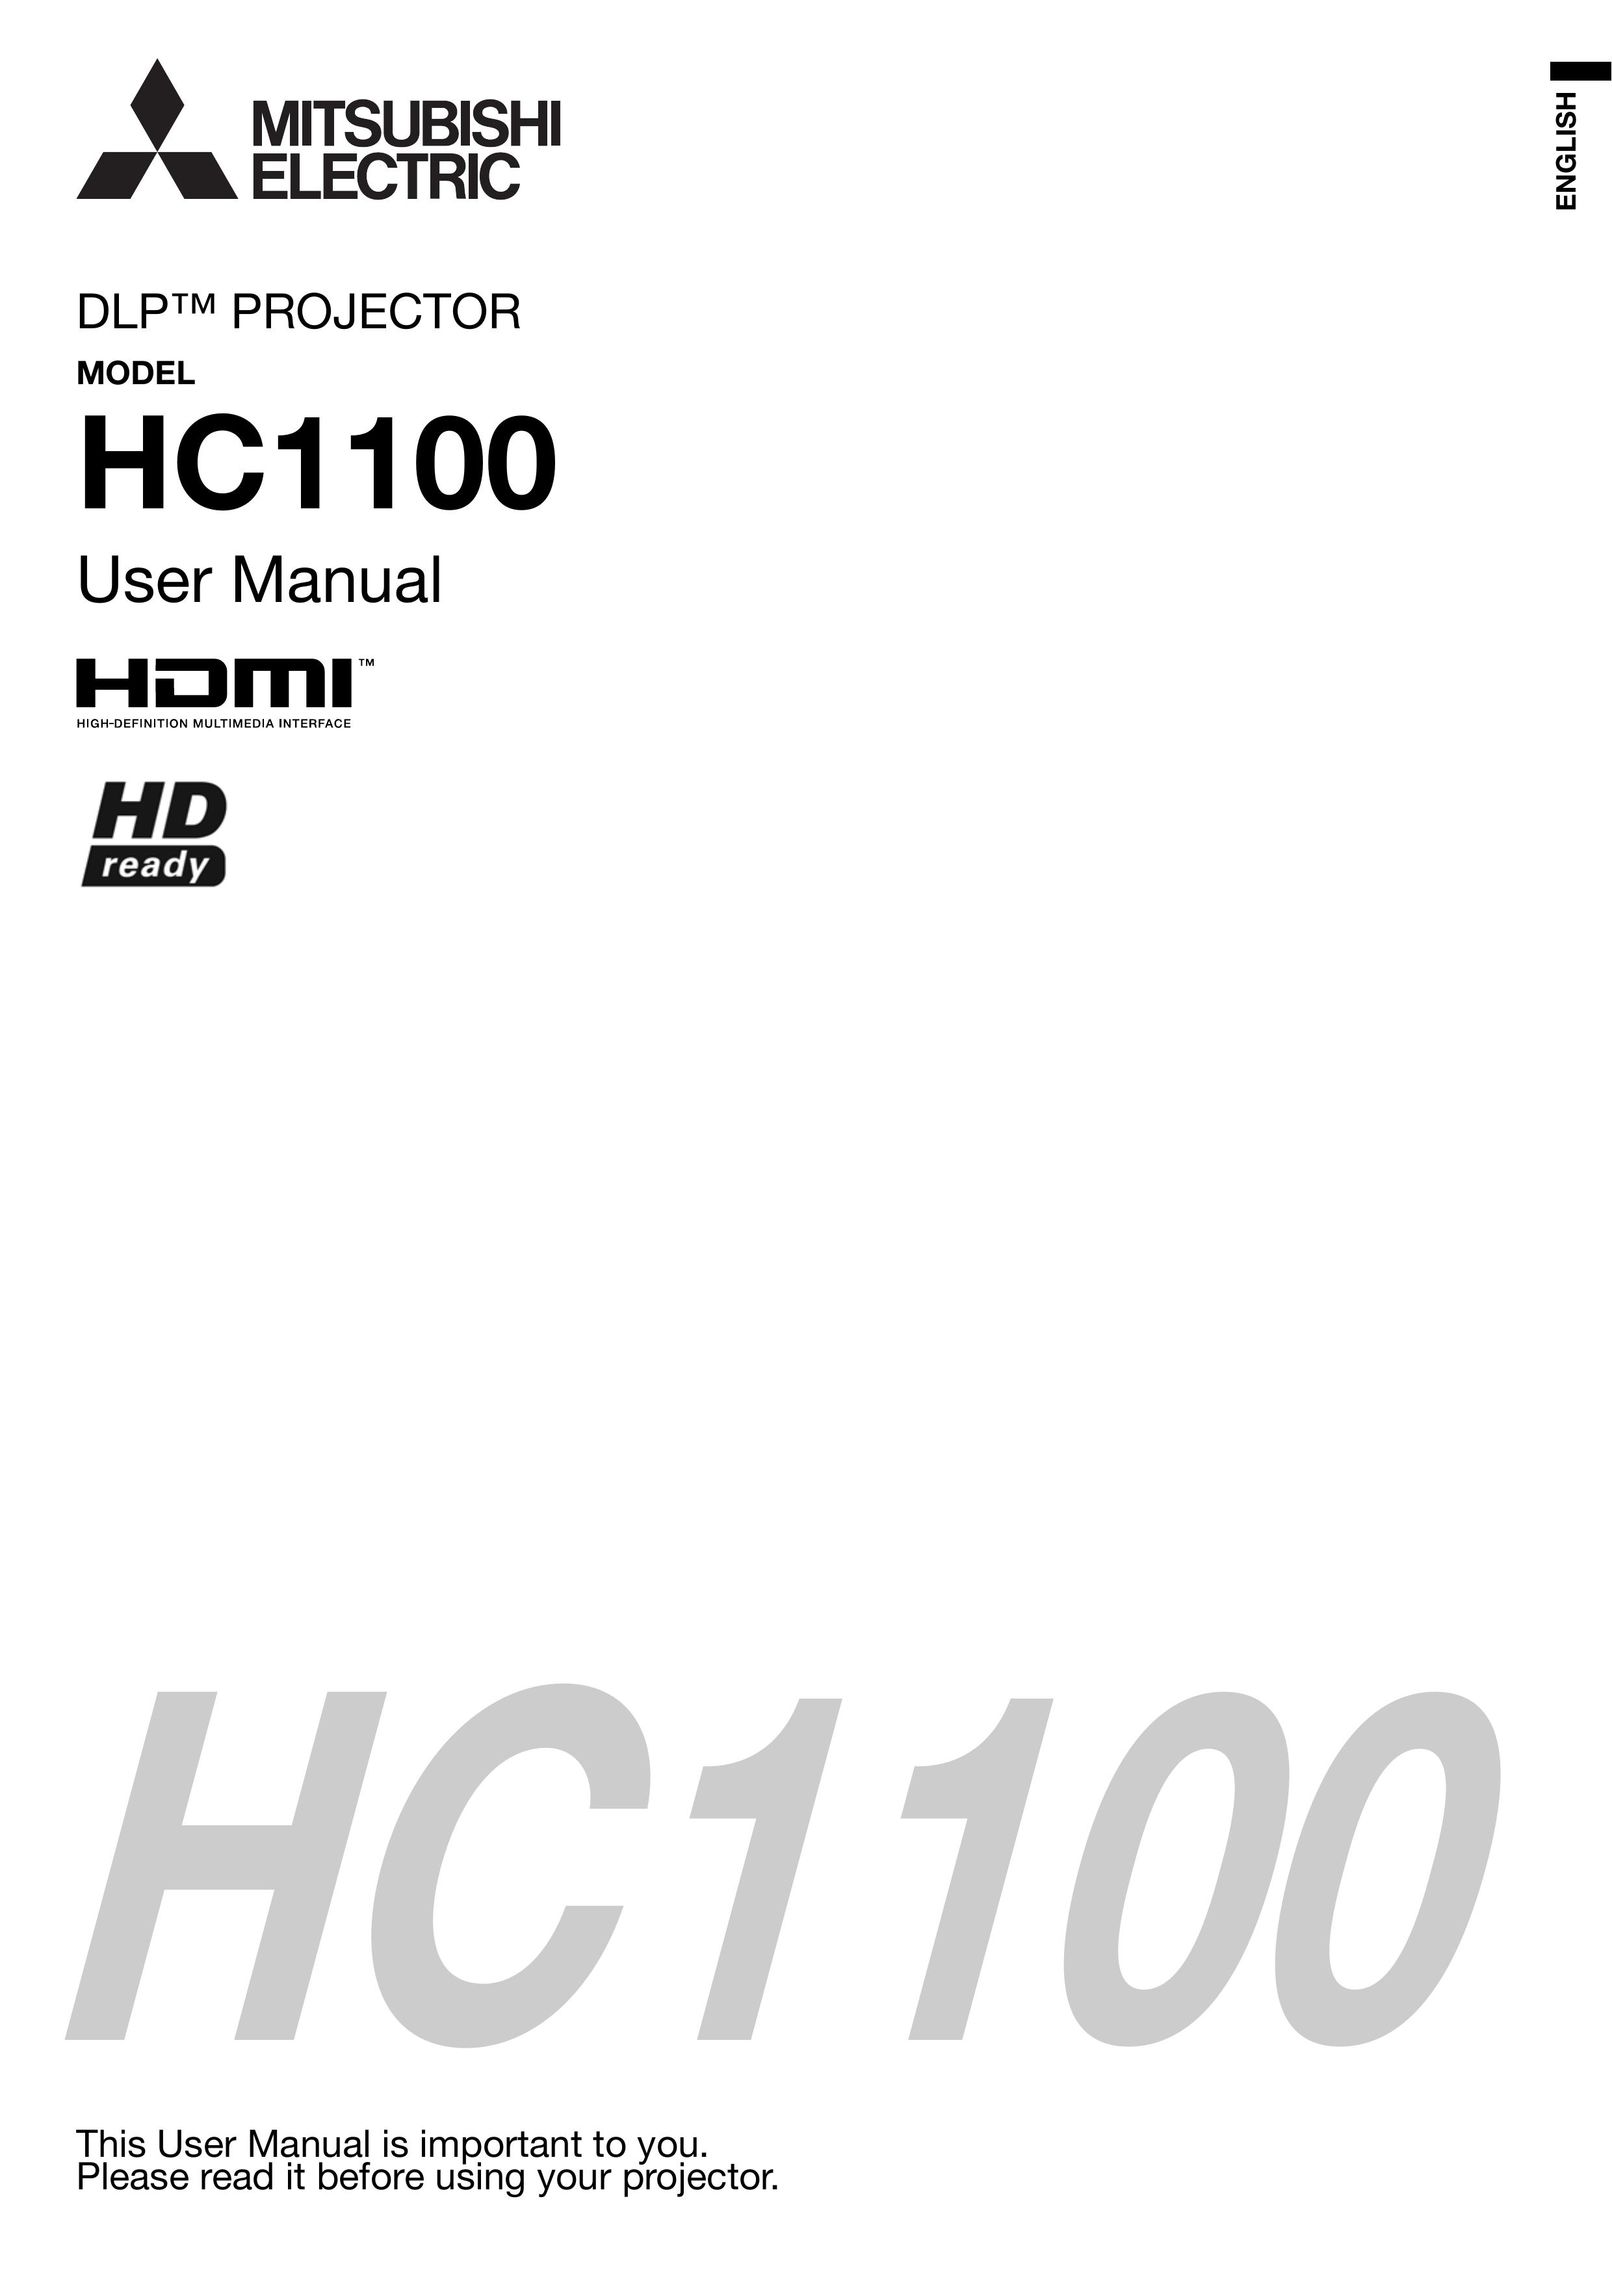 Mitsubishi HC1100 Projector User Manual